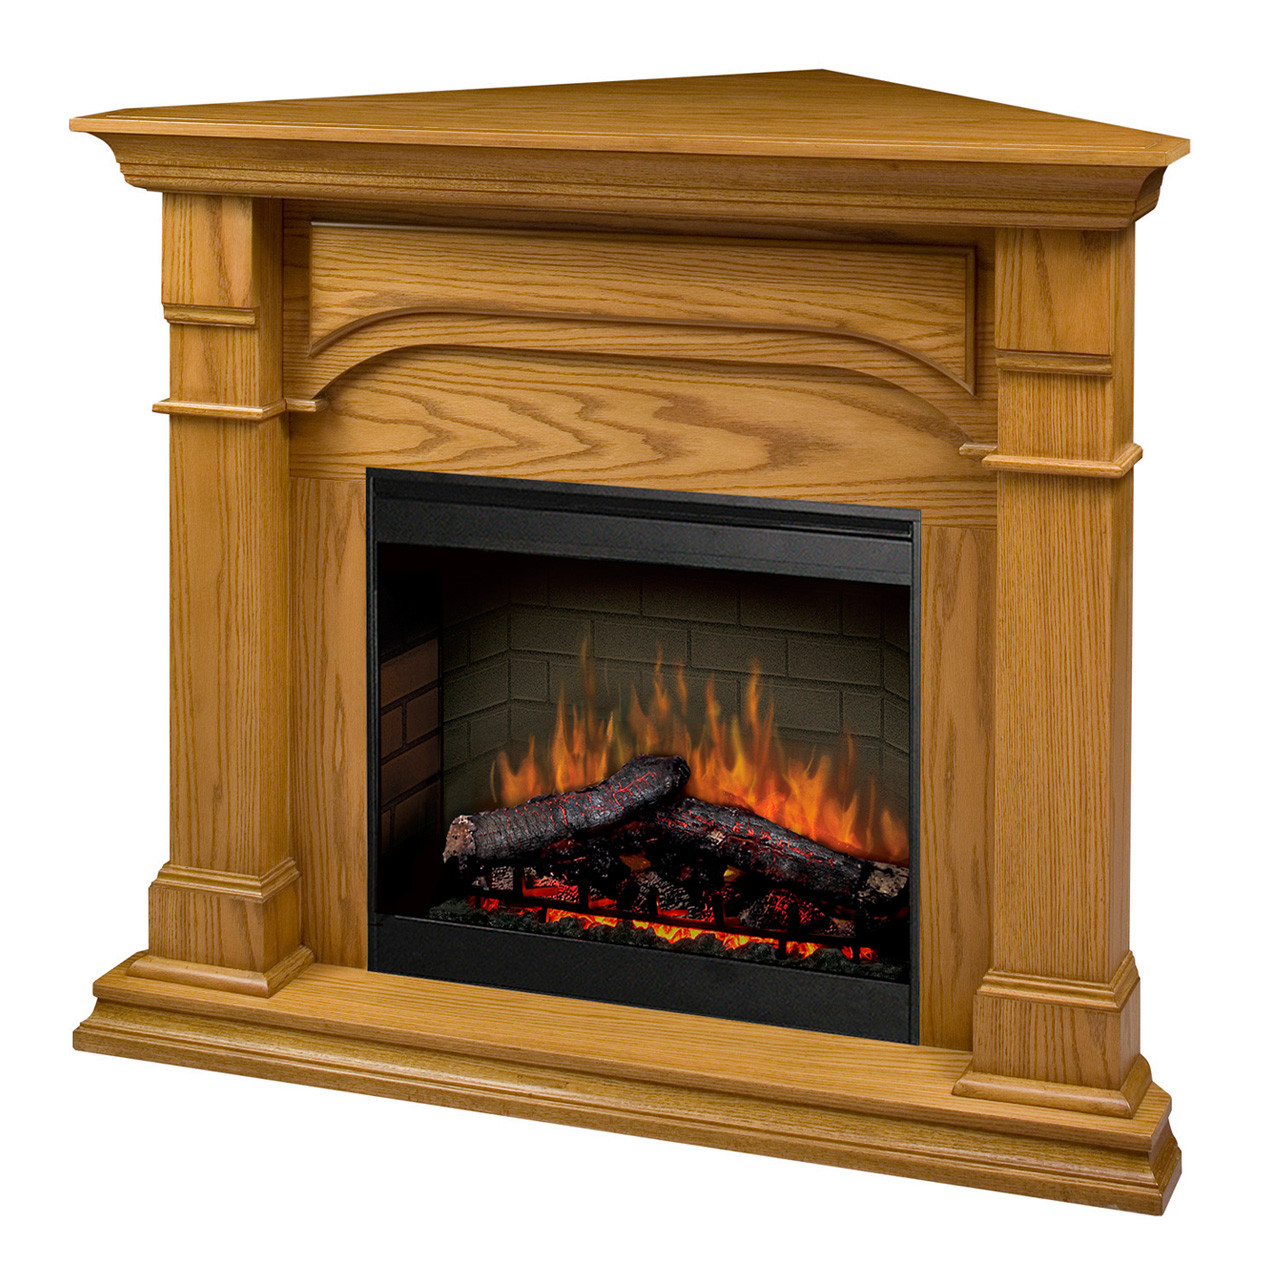 Best ideas about Corner Electric Fireplace
. Save or Pin Dimplex Oxford Corner Electric Fireplace in Medium Oak SMP Now.